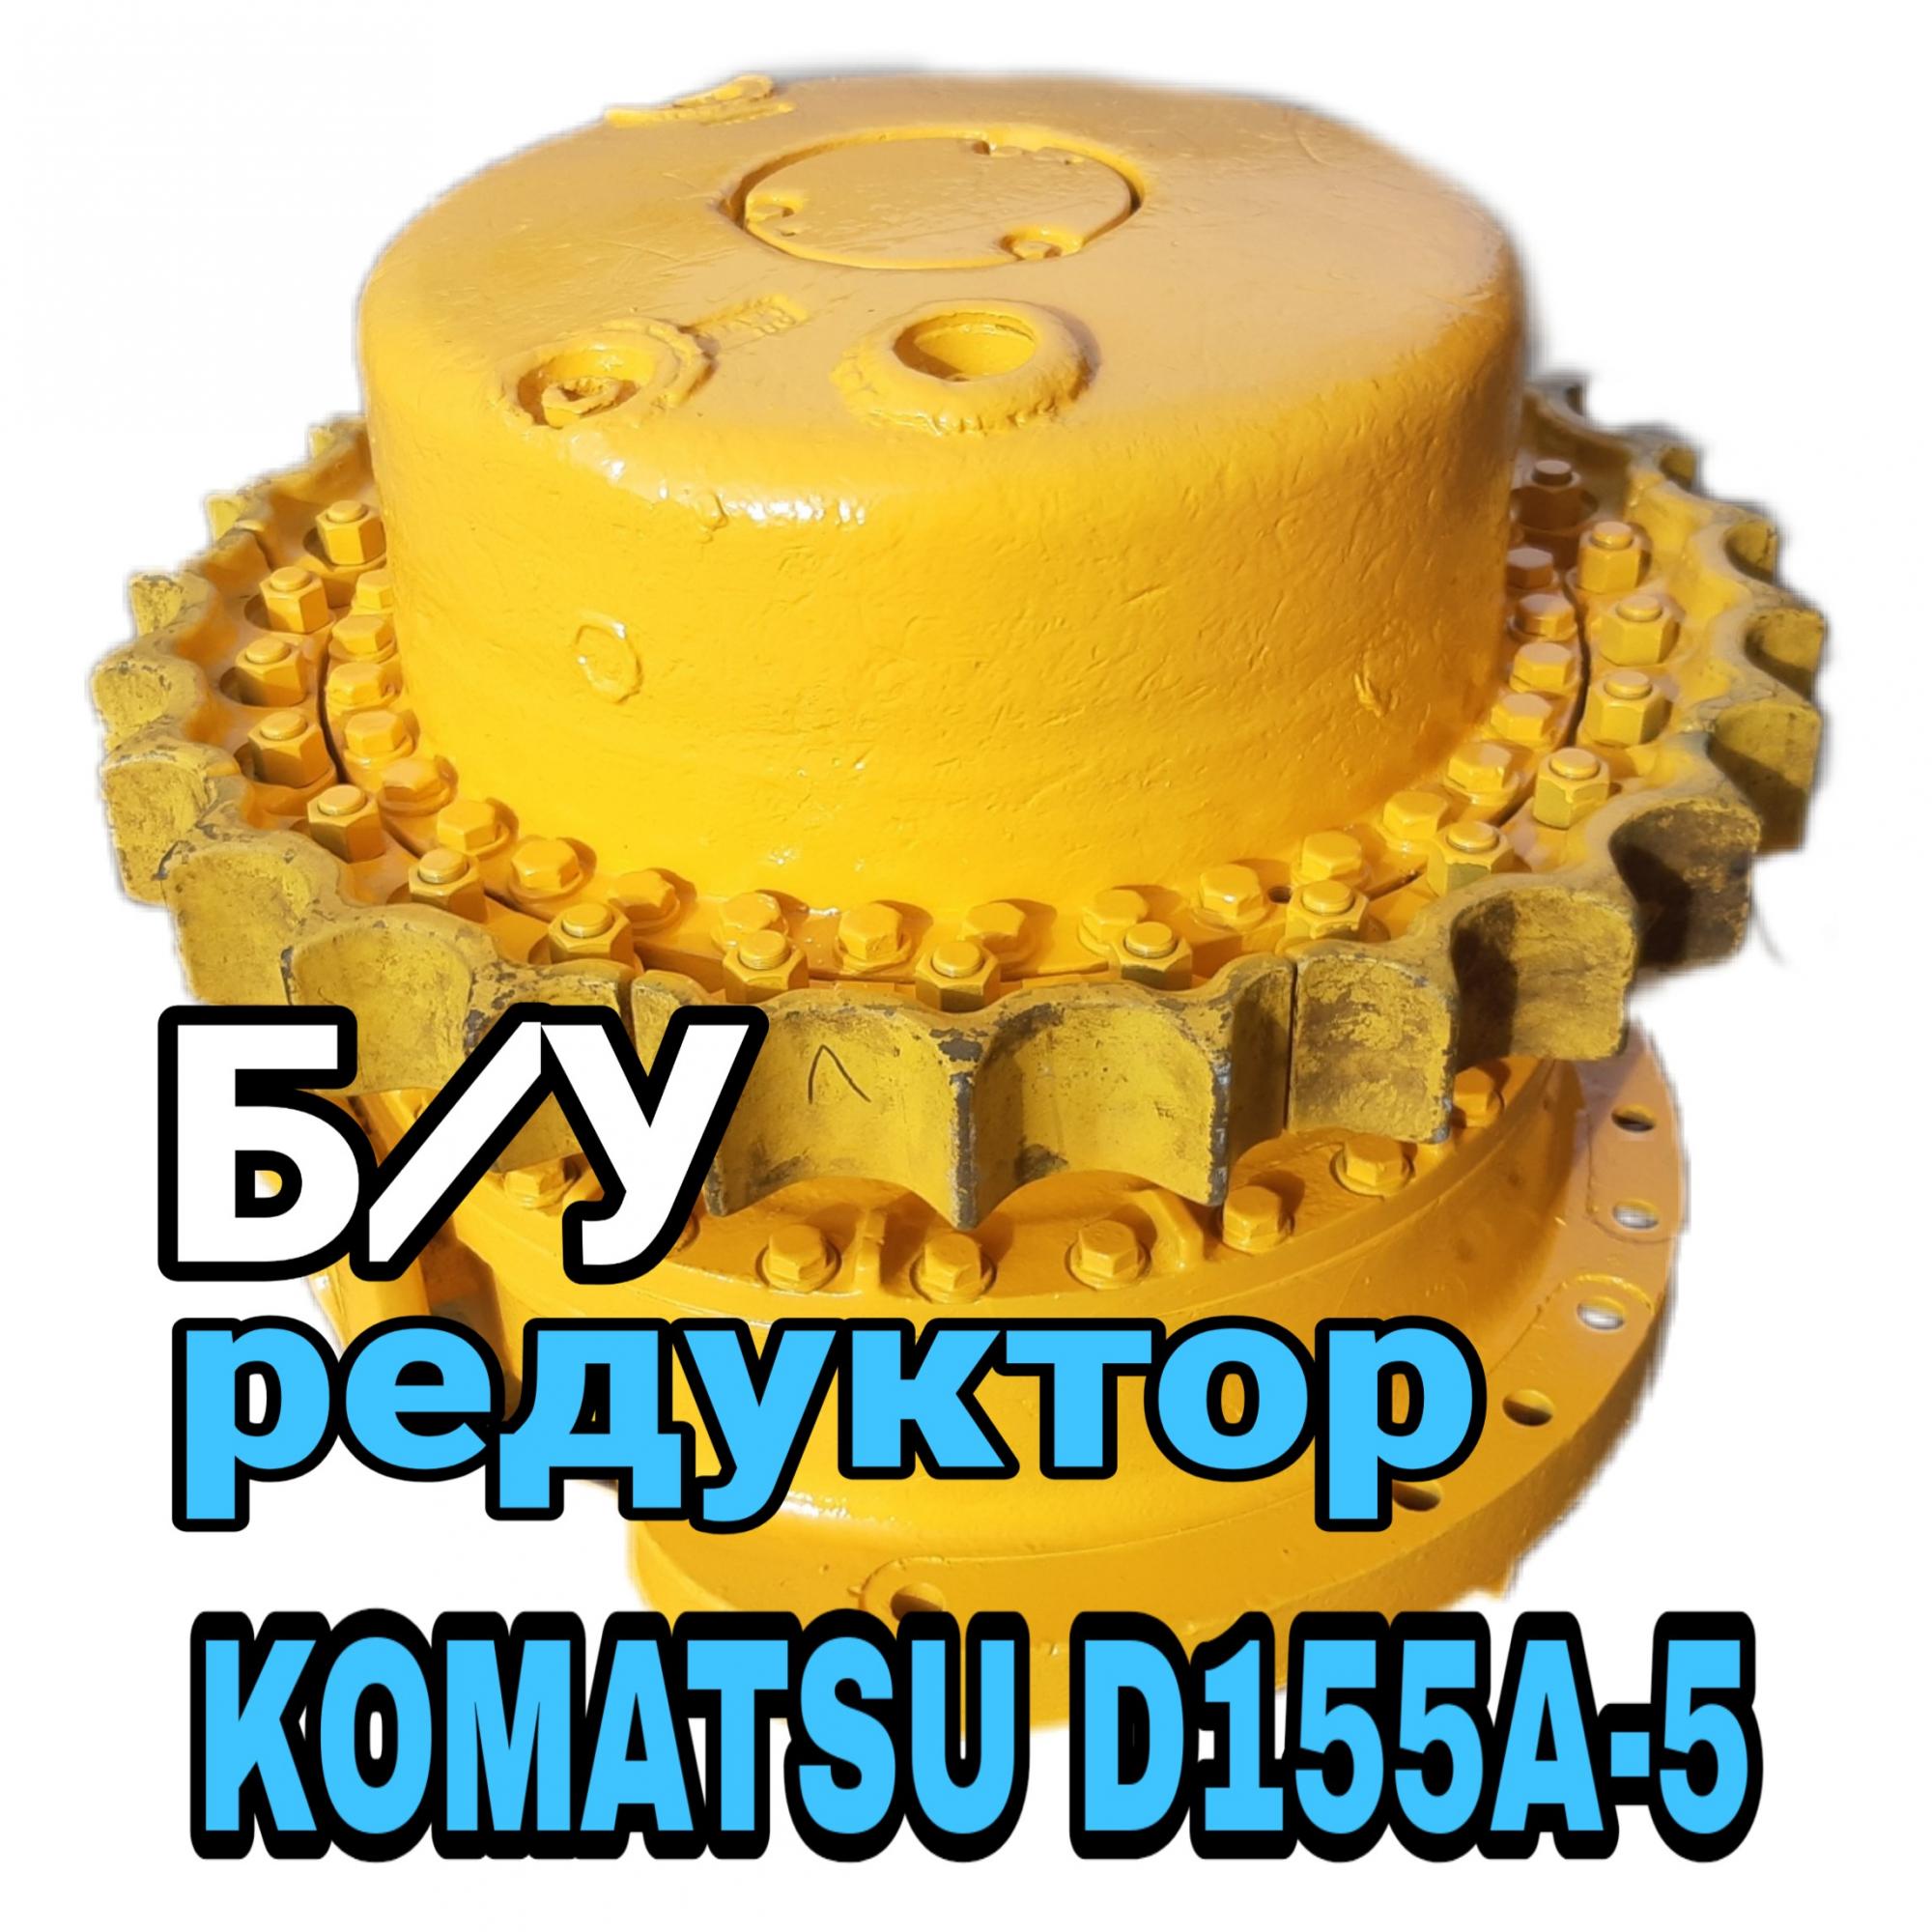 Бортовой редуктор KOMATSU D155A-5